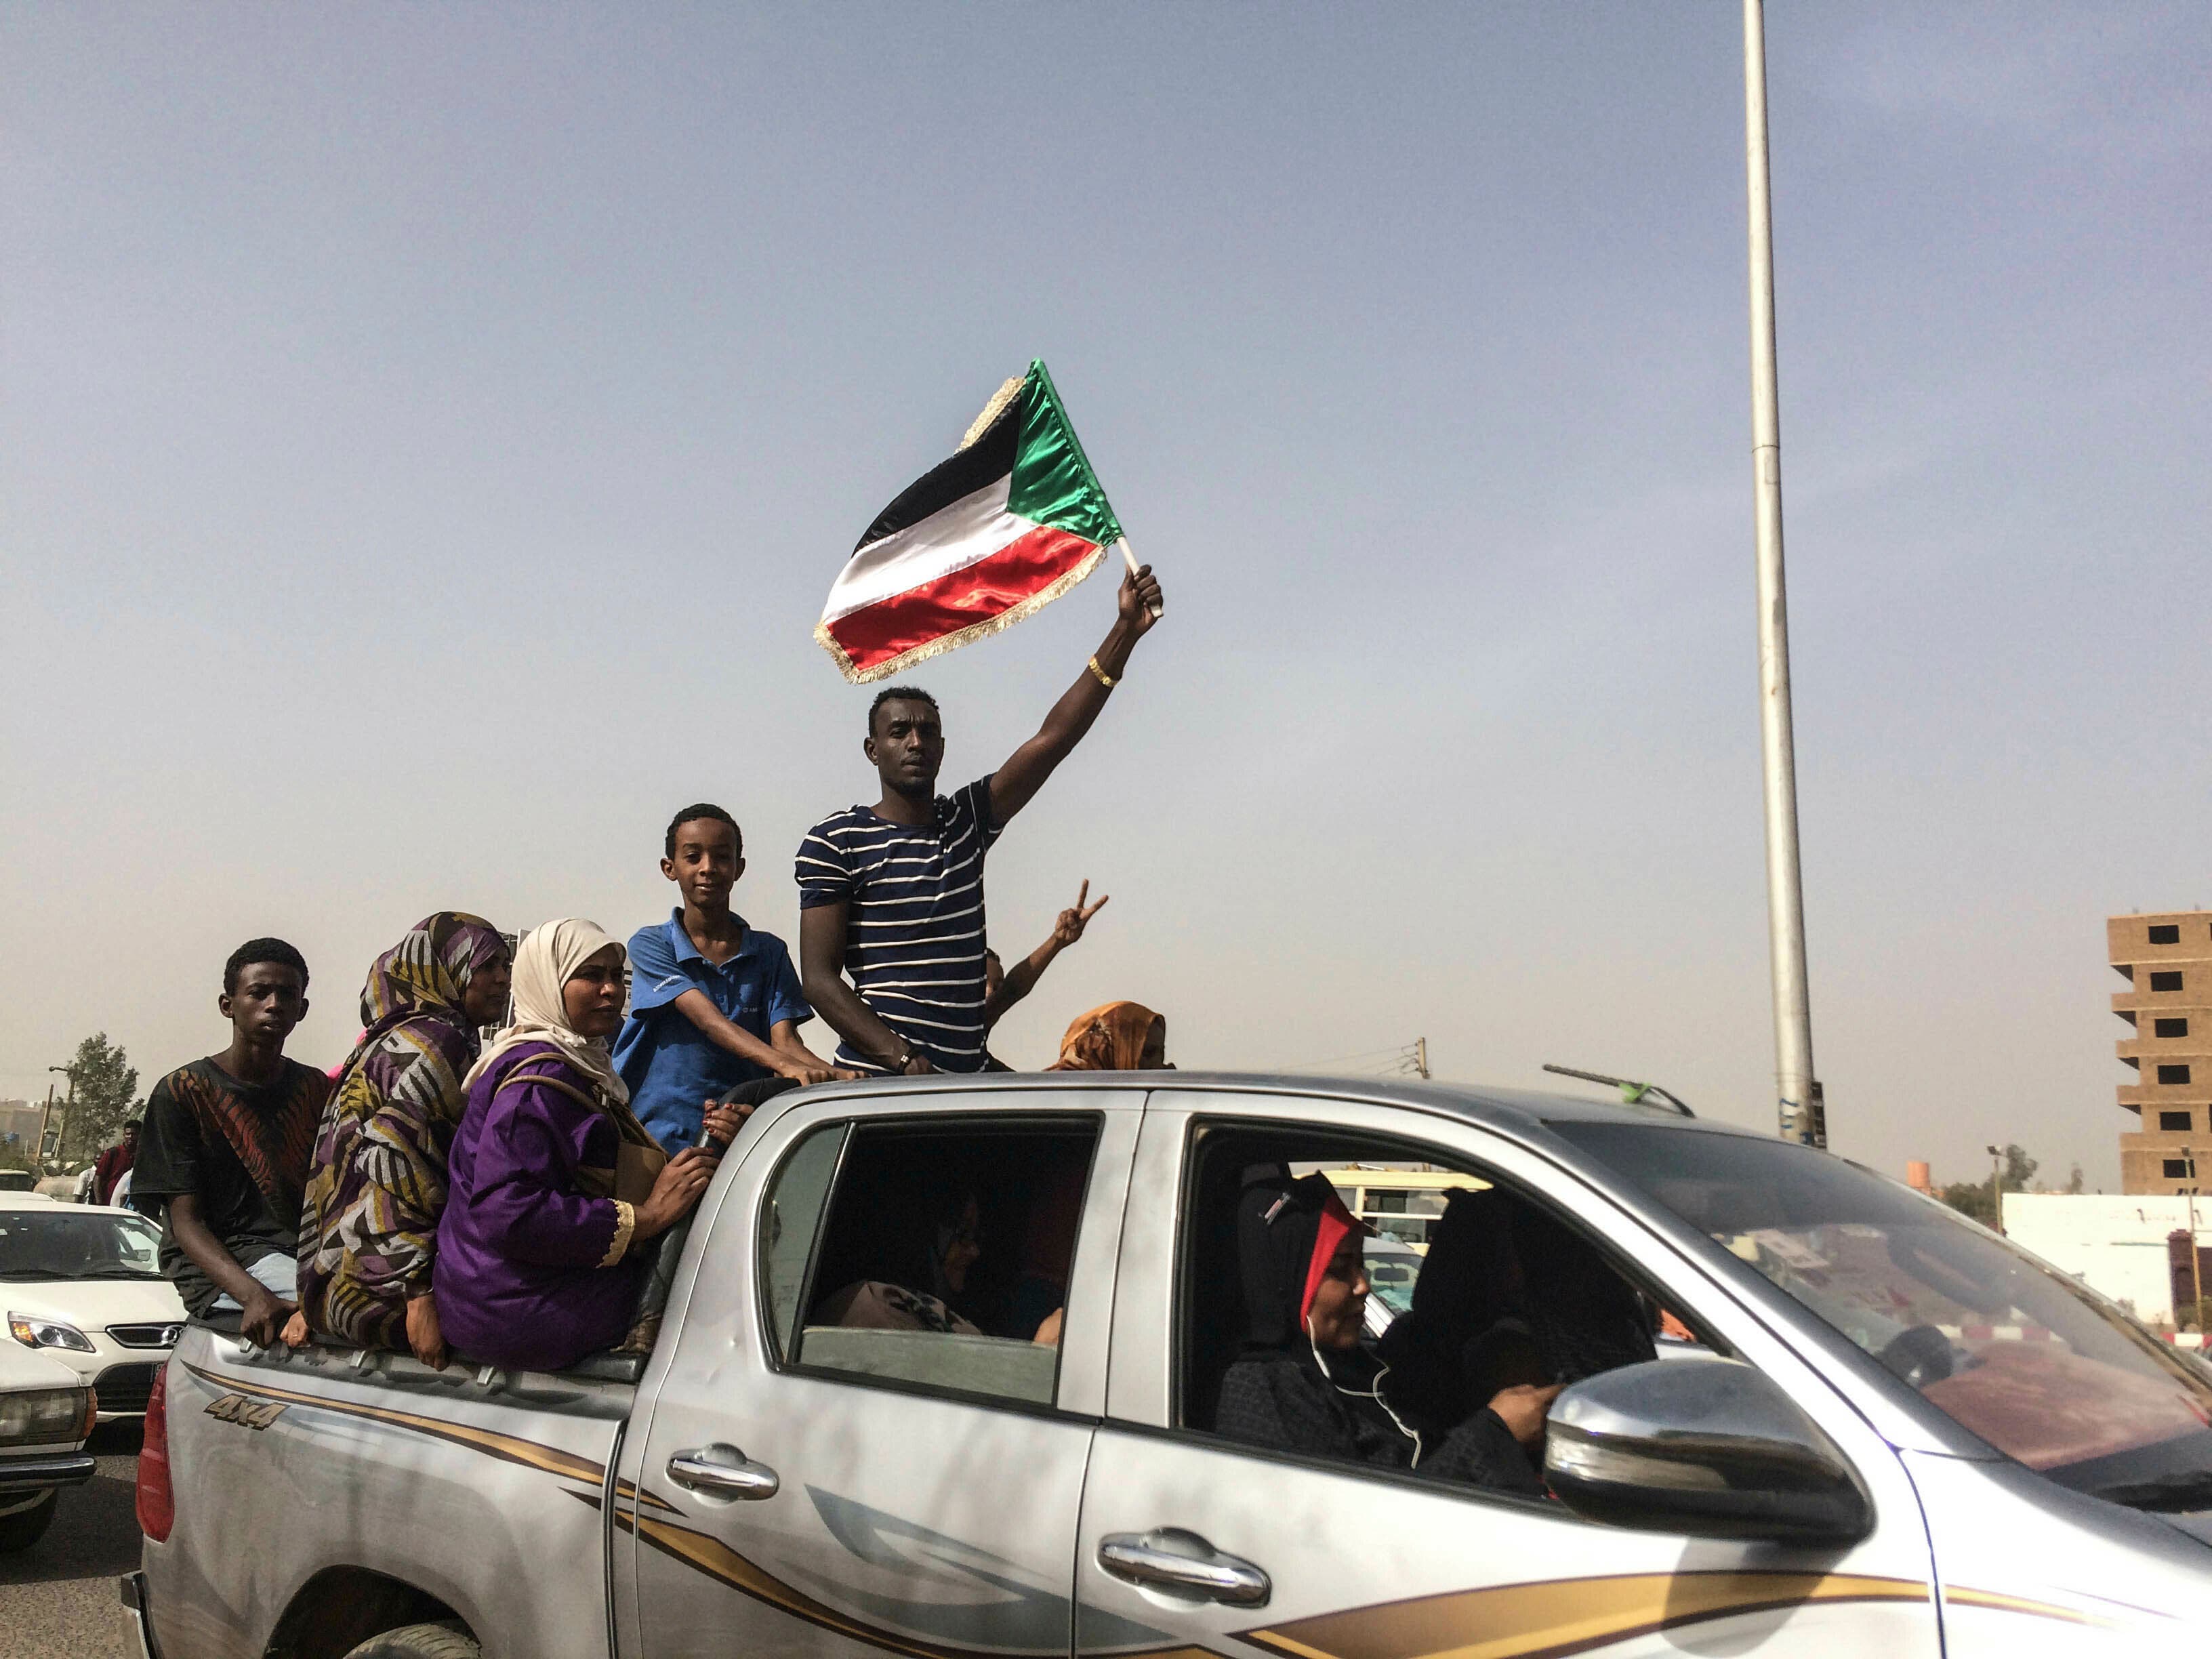 Demonstranten feiern den Abgang des Präsidenten Omar al-Baschir. Dieser wurde am Donnerstag festgenommen. (Bild: AP Photo, Sudan, 11. April 2019)